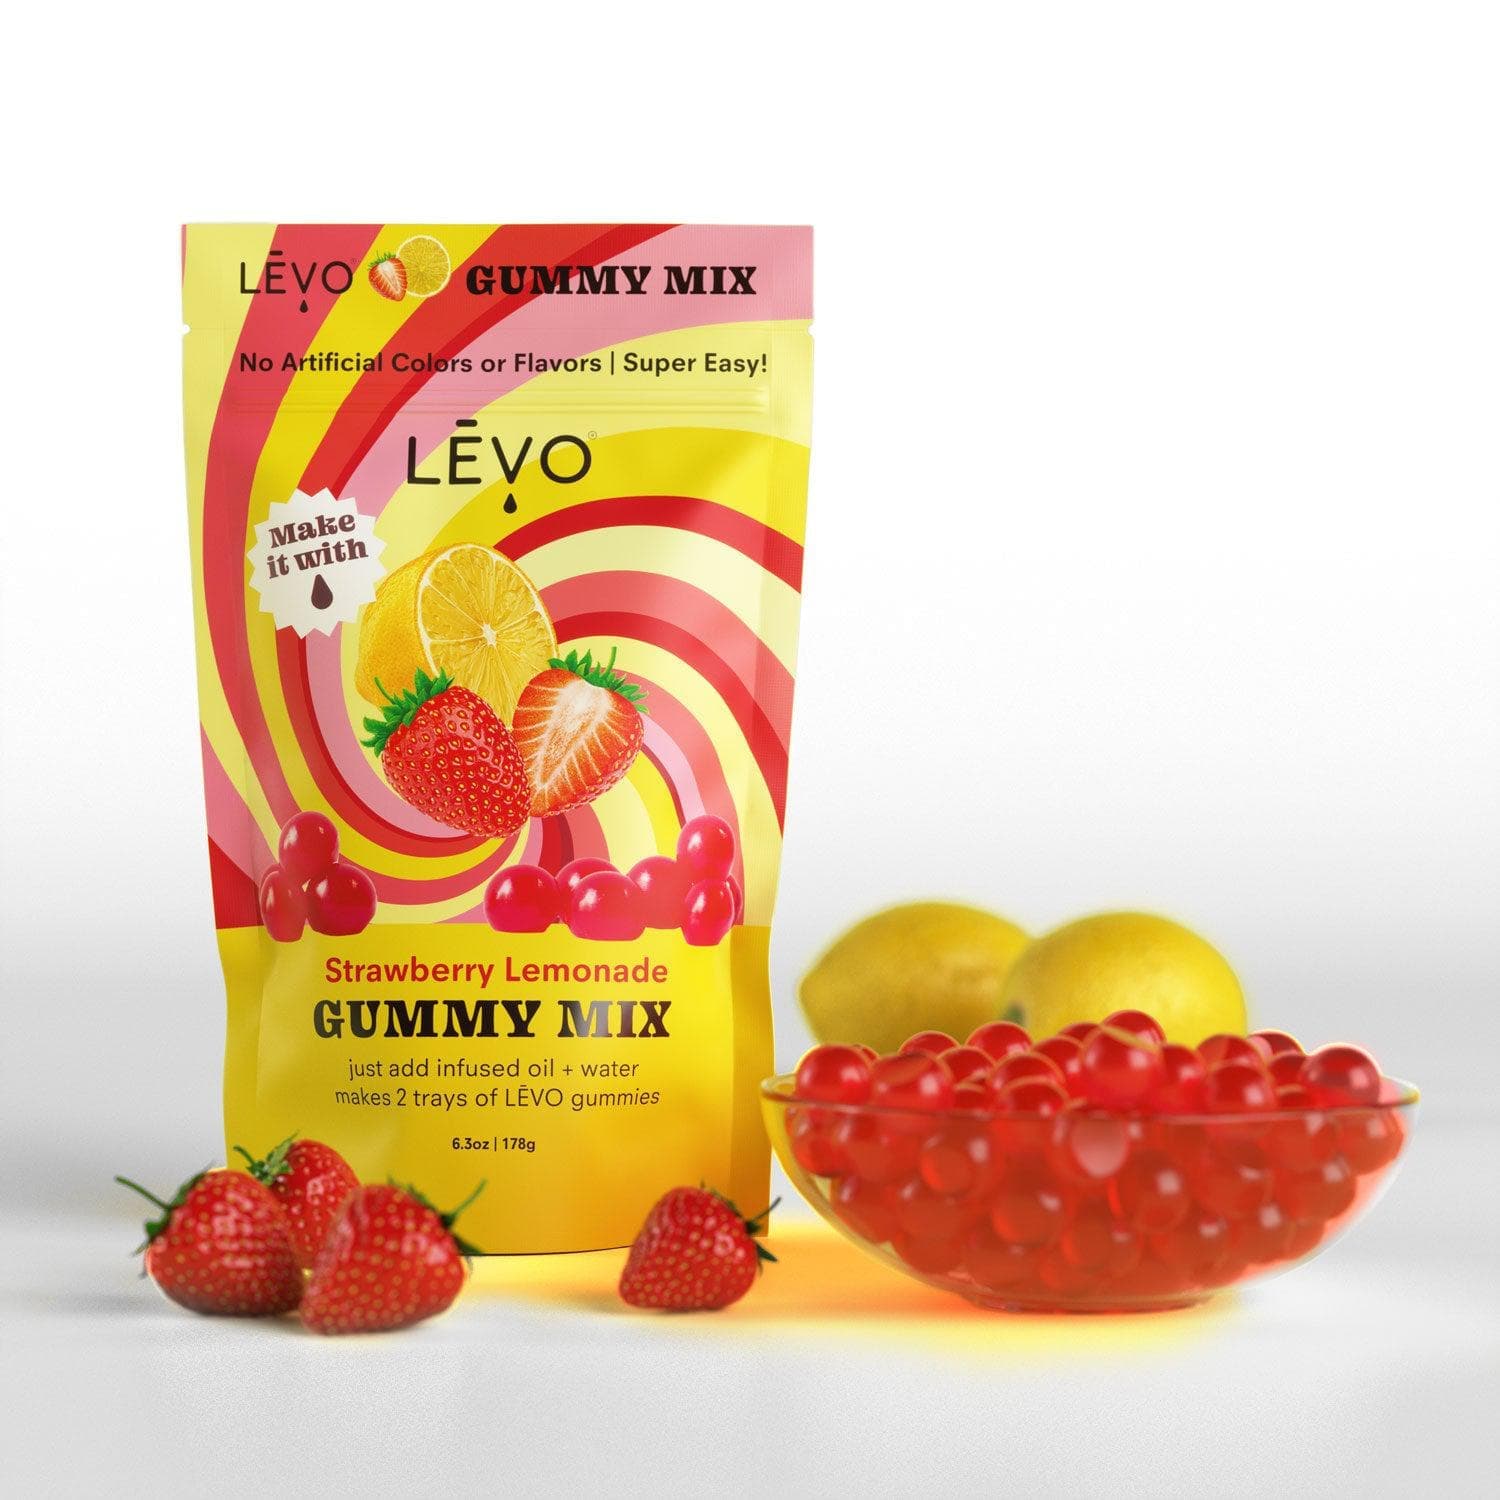 LEVO Gummy mix in strawberry lemonade. Strawberry Lemonade Gummy Mix - Enjoy the perfect blend of sweet strawberries and zesty lemonade in this LĒVO gummy mix.